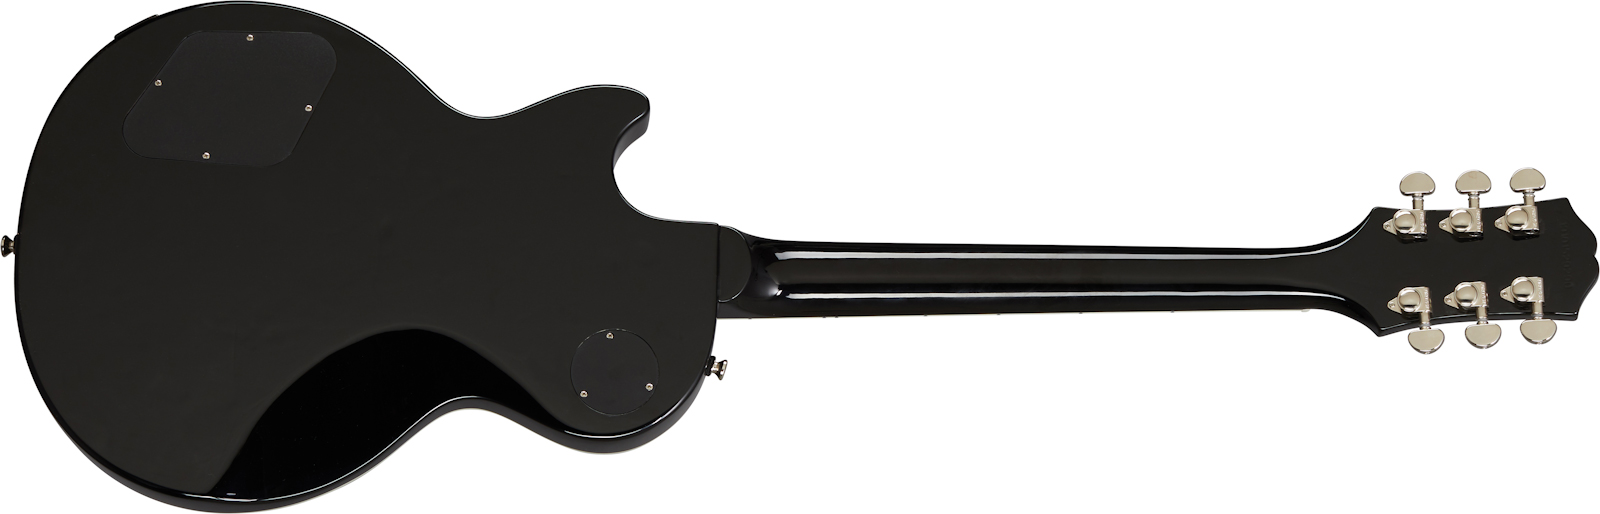 Epiphone Les Paul Muse Modern 2h Ht Lau - Jet Black Metallic - Enkel gesneden elektrische gitaar - Variation 2